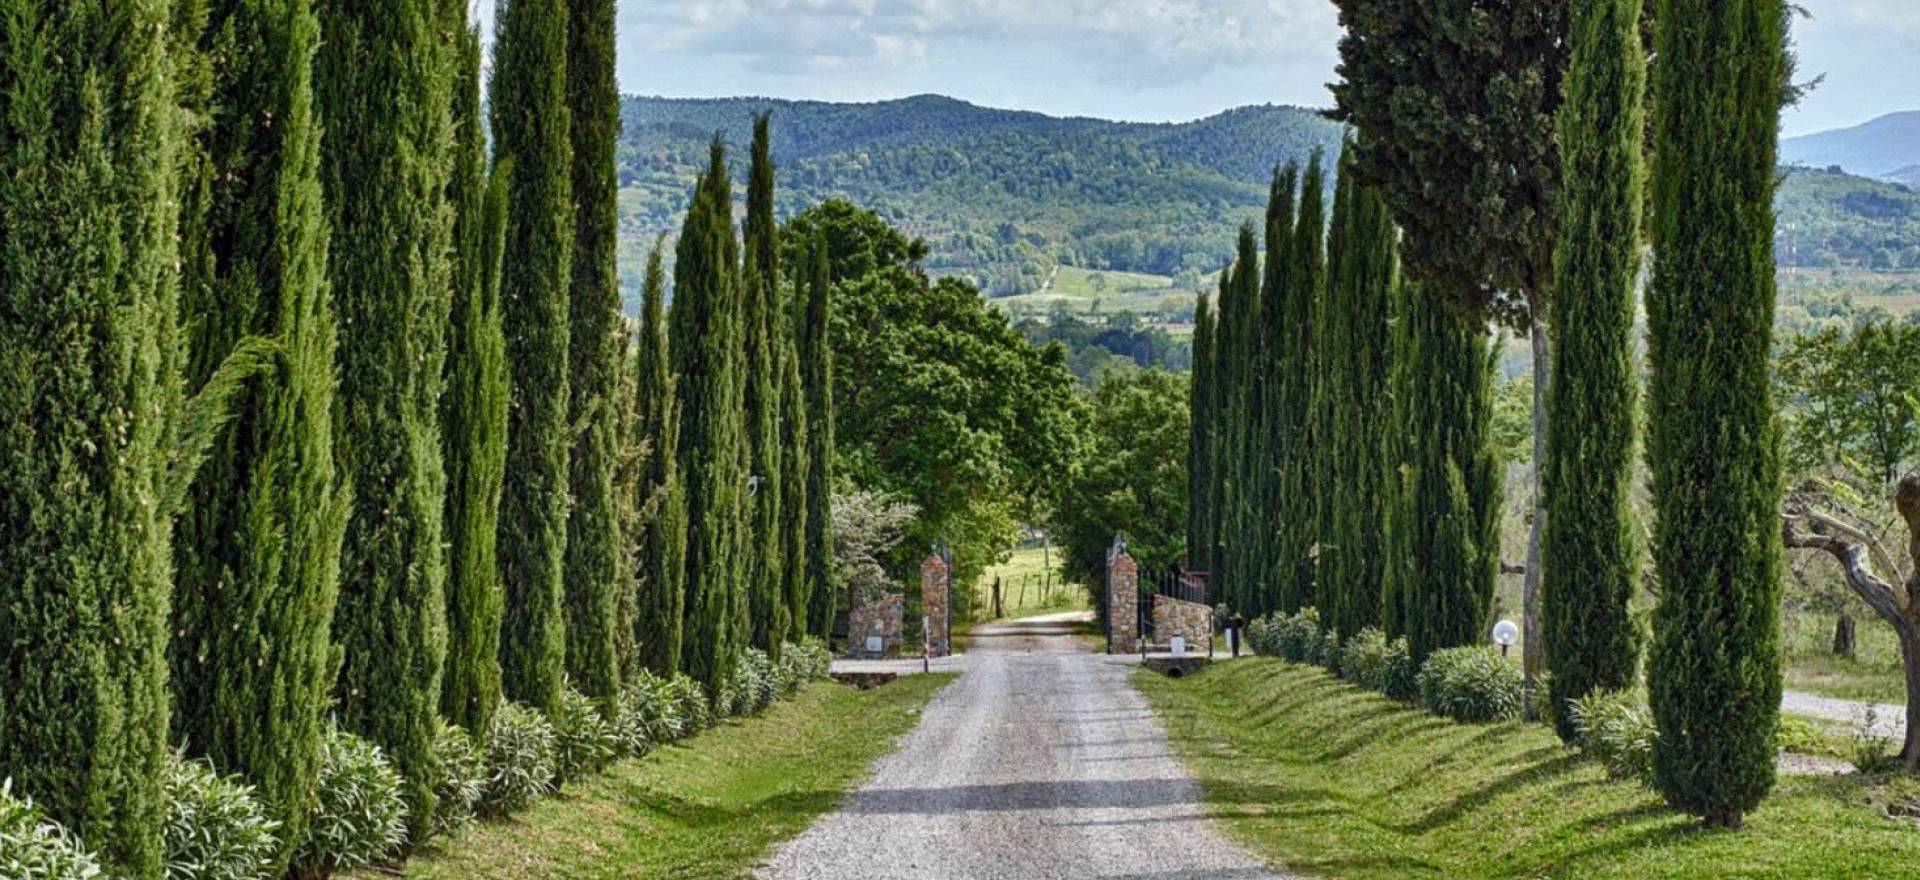 Agriturismo Toscana Agriturismo in posizione tranquilla e rurale in Toscana